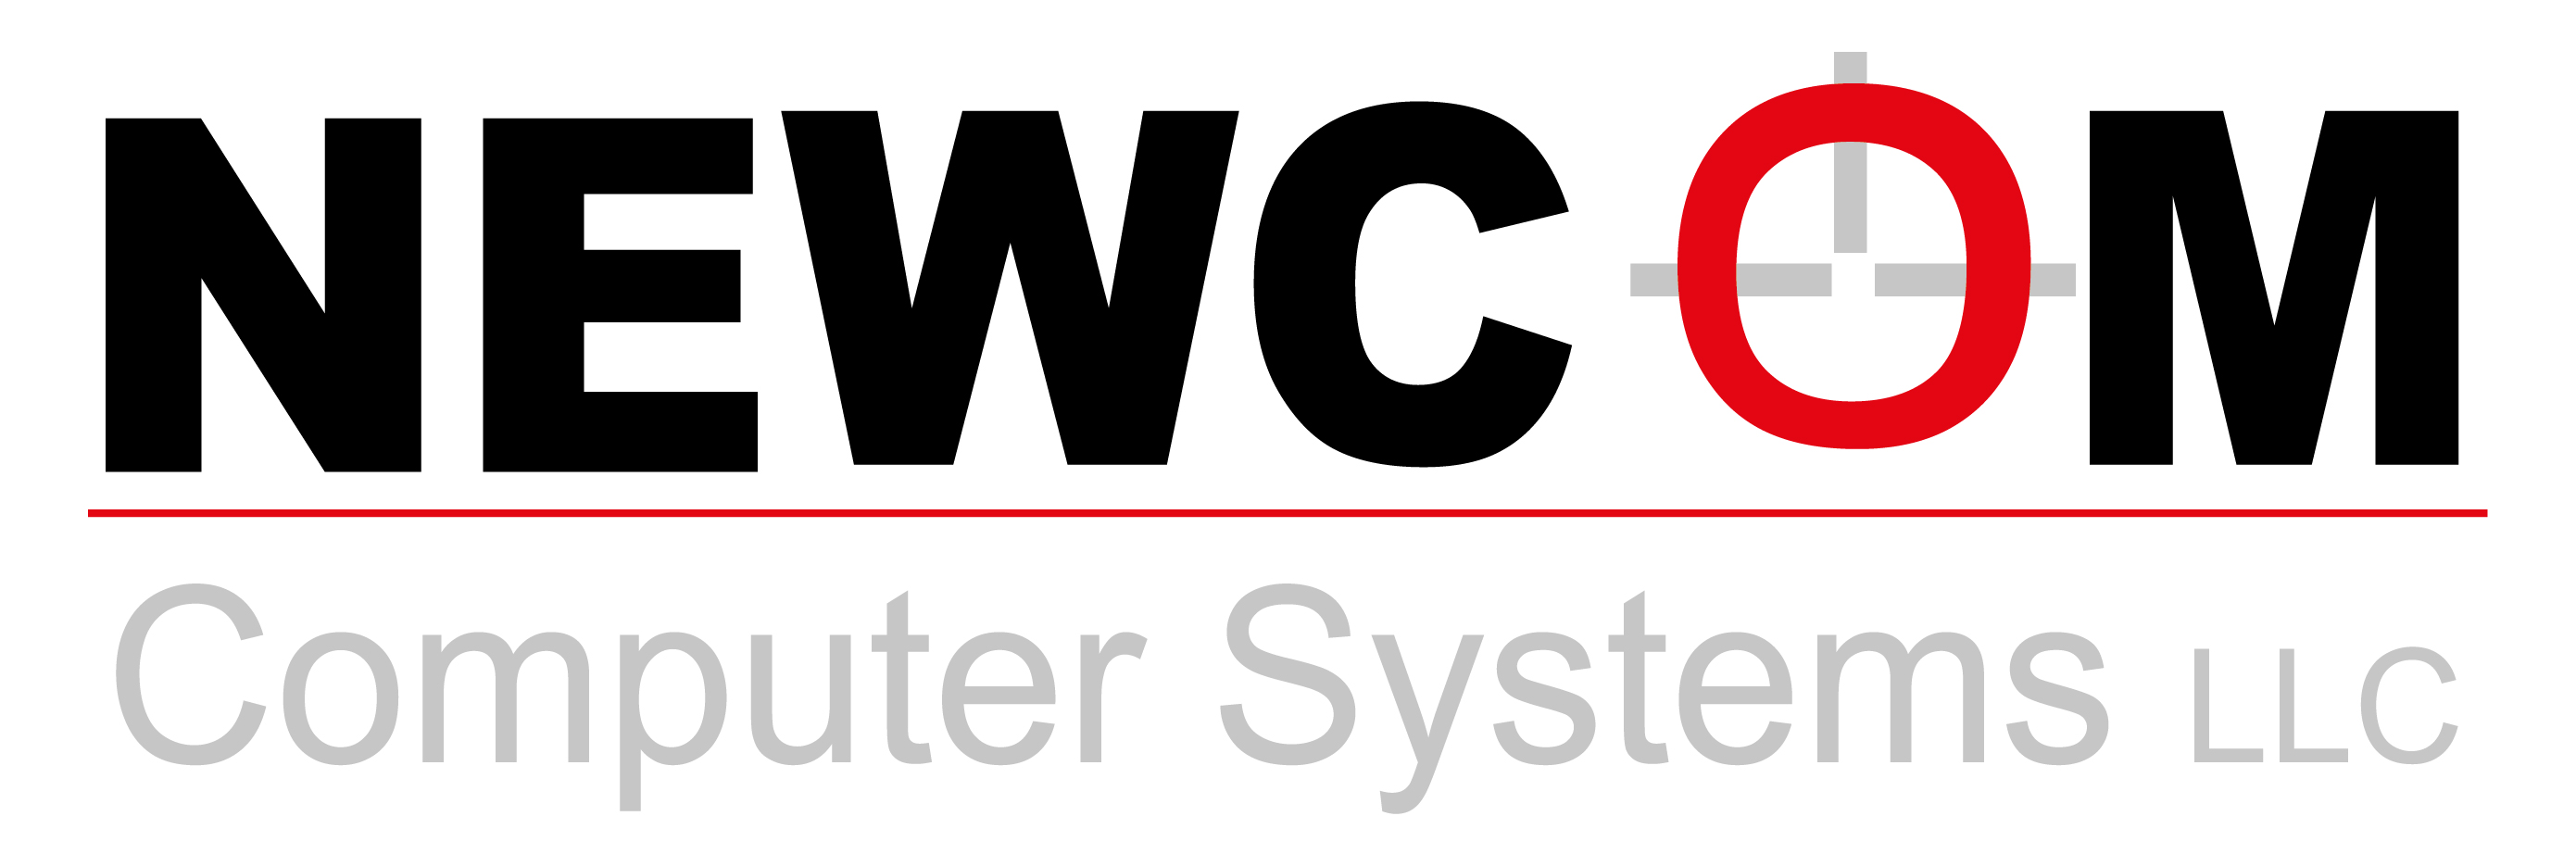 Newcom Computers System LLC